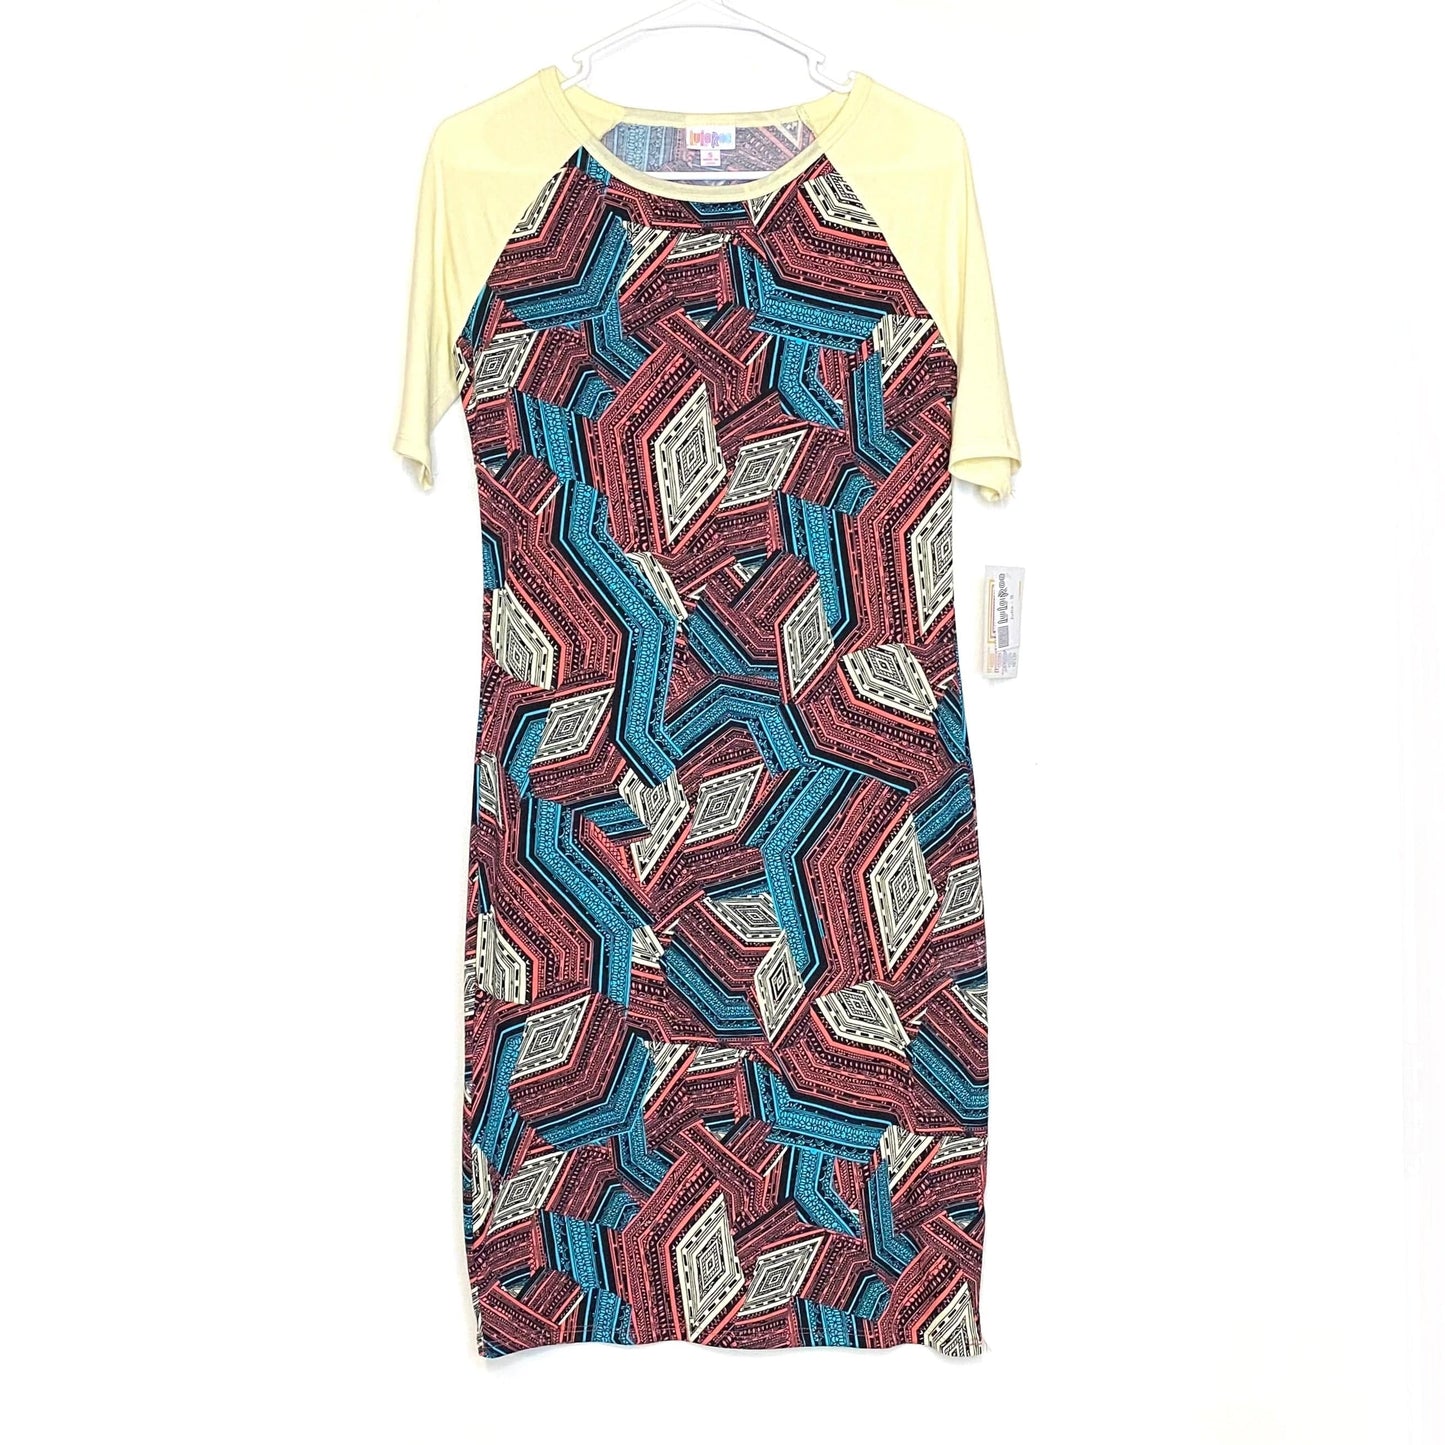 LuLaRoe Womens S Yellow/Blue/Red Geometric Julia Dress Scoop Neck ½ Sleeves NWT